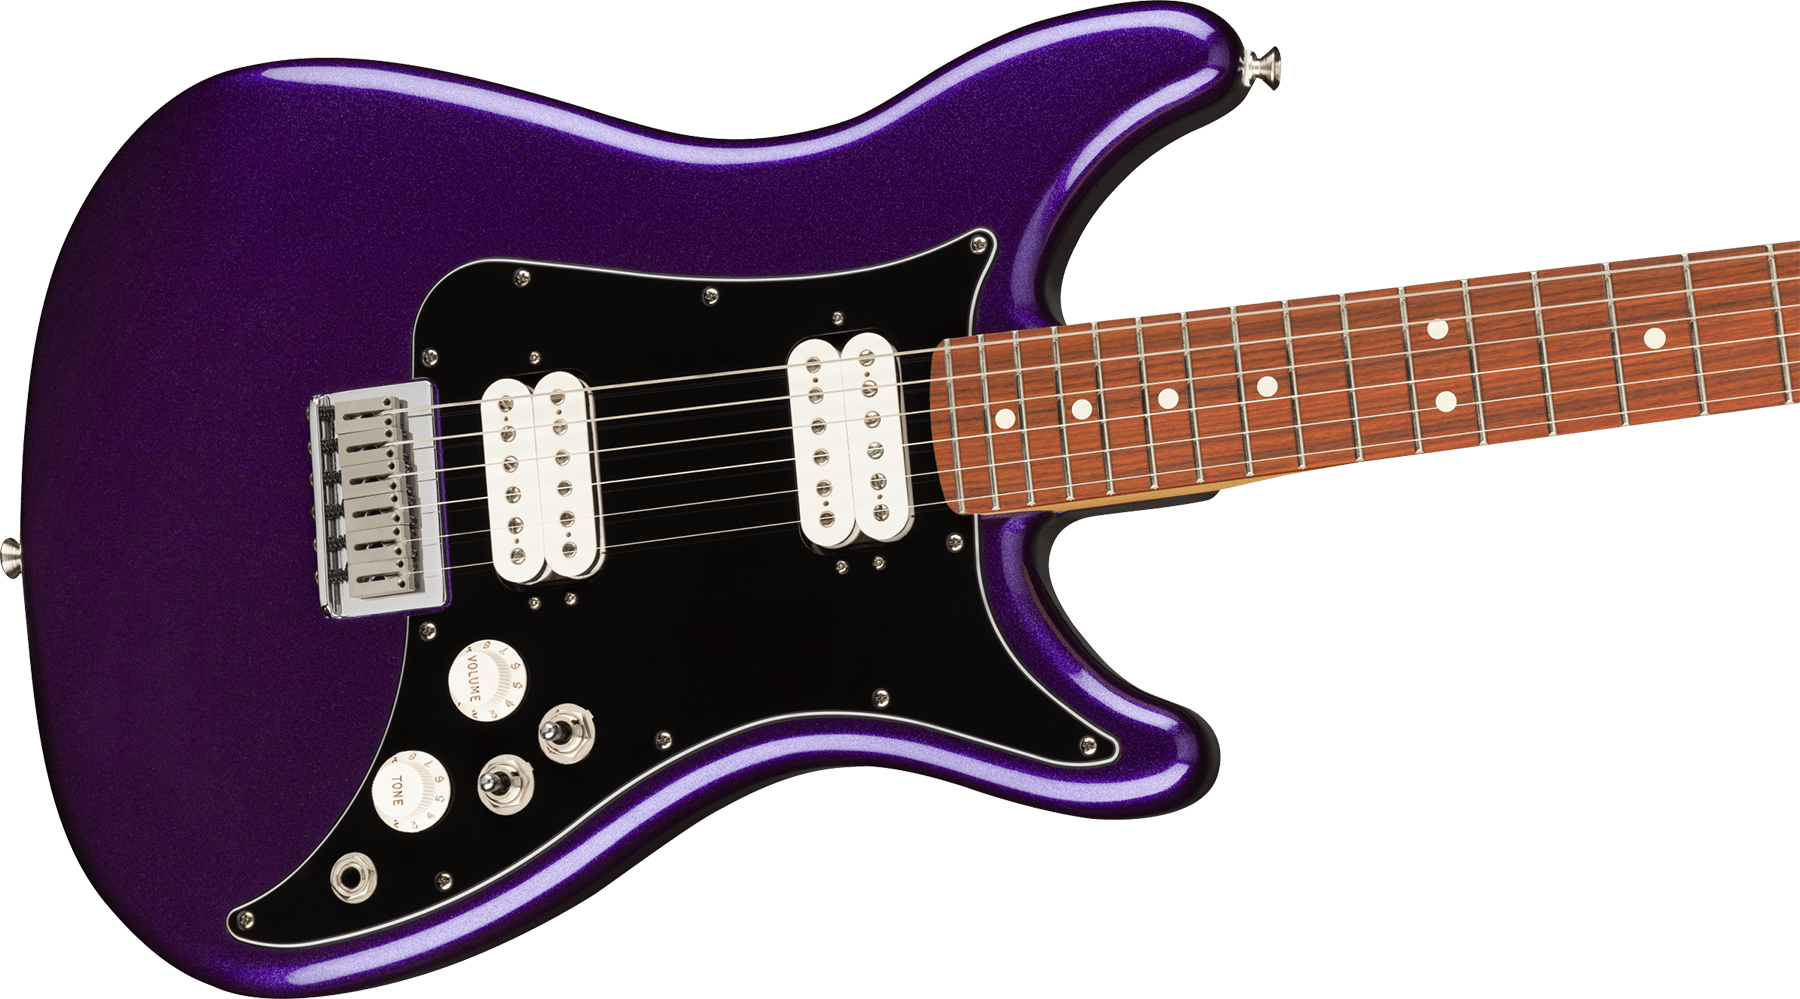 Fender Lead Iii Player Mex Hh Ht Pf - Metallic Purple - Str shape electric guitar - Variation 2